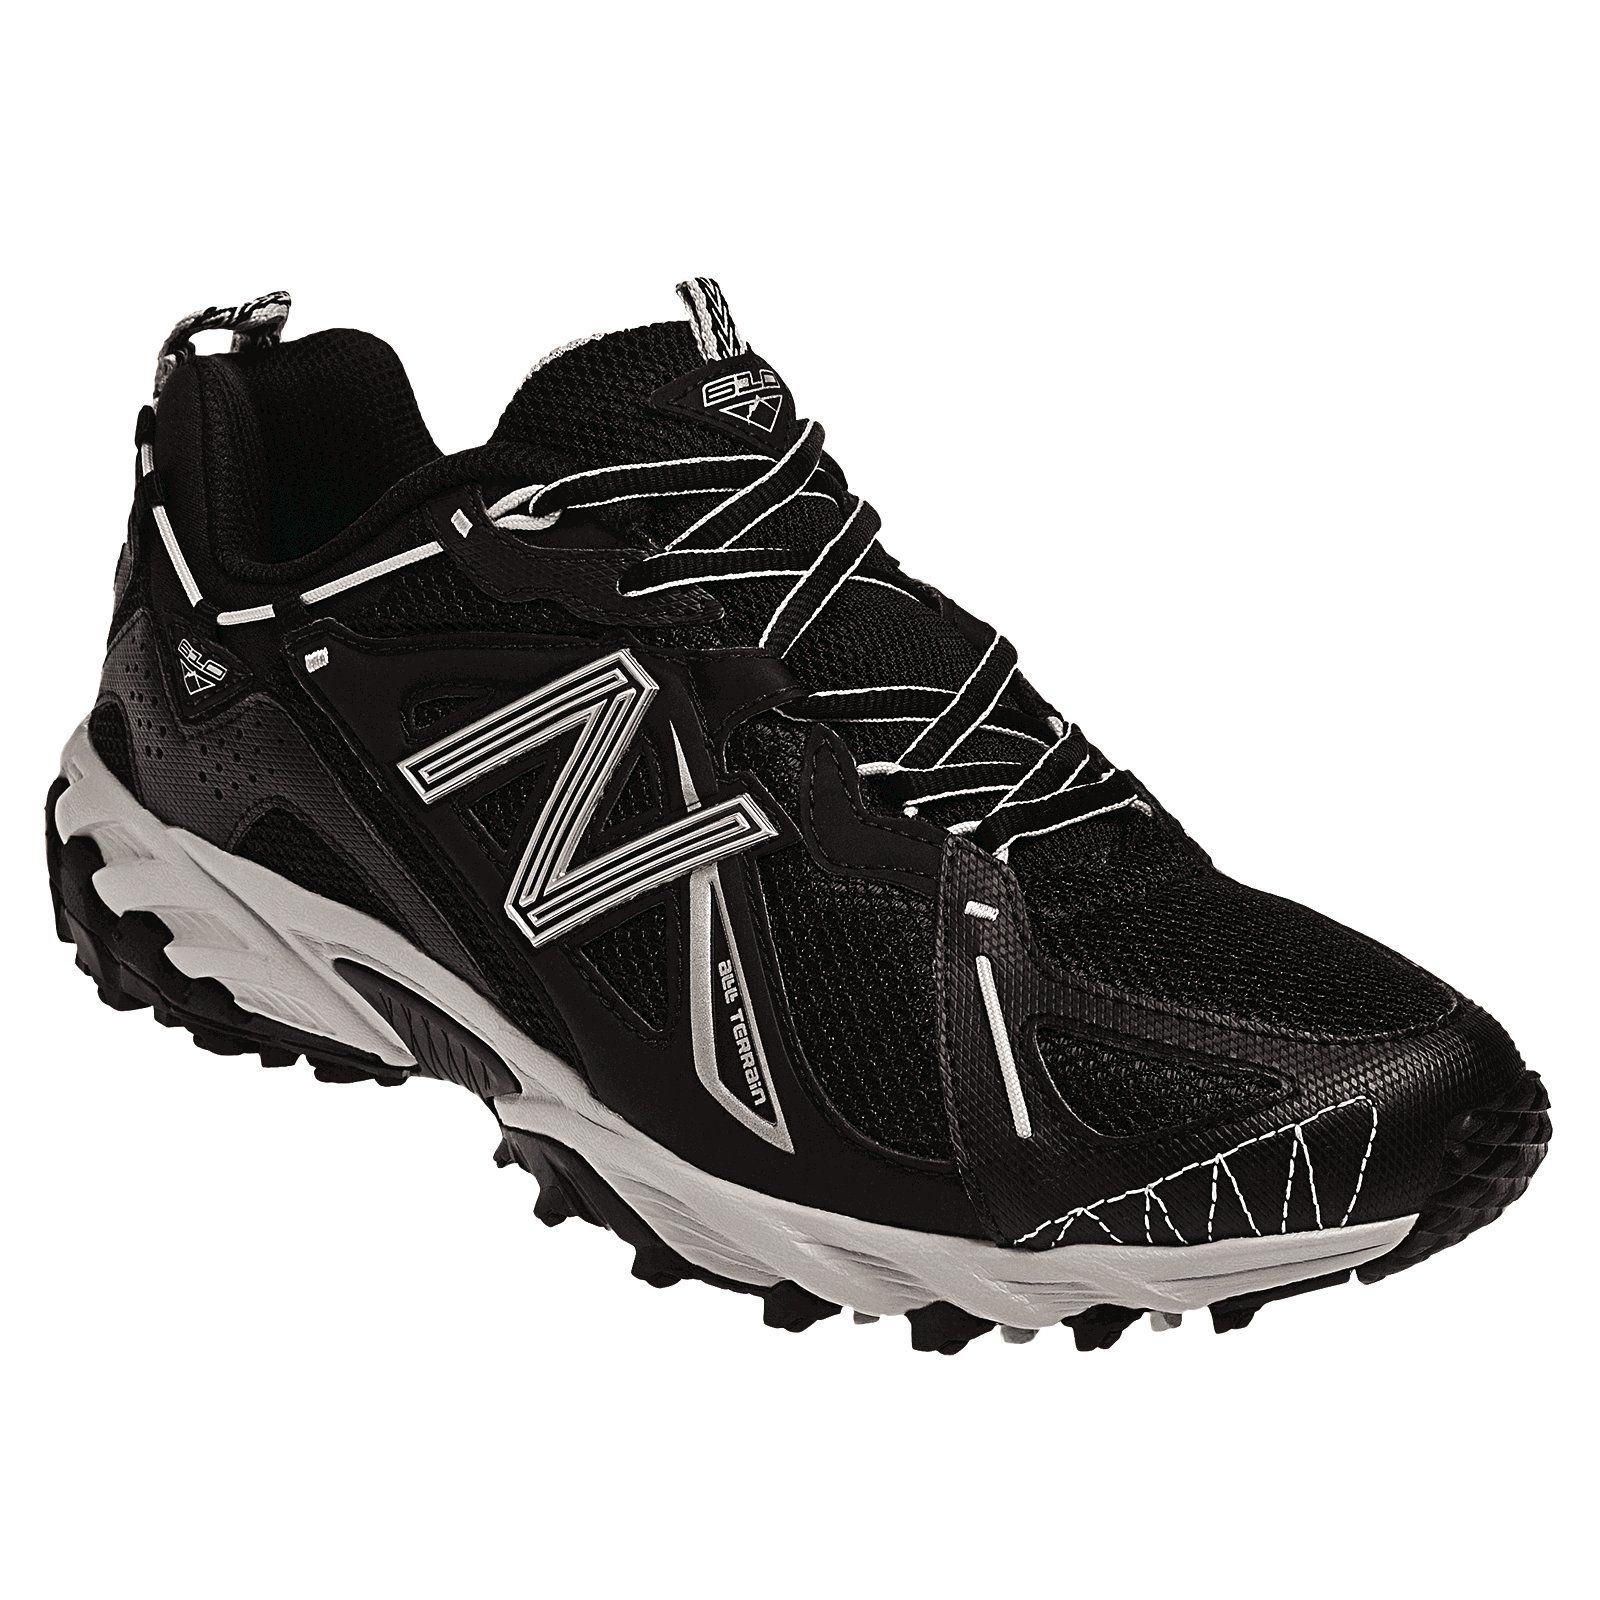 New Balance Men's 610 Trail Running Athletic Shoe - Black/Grey